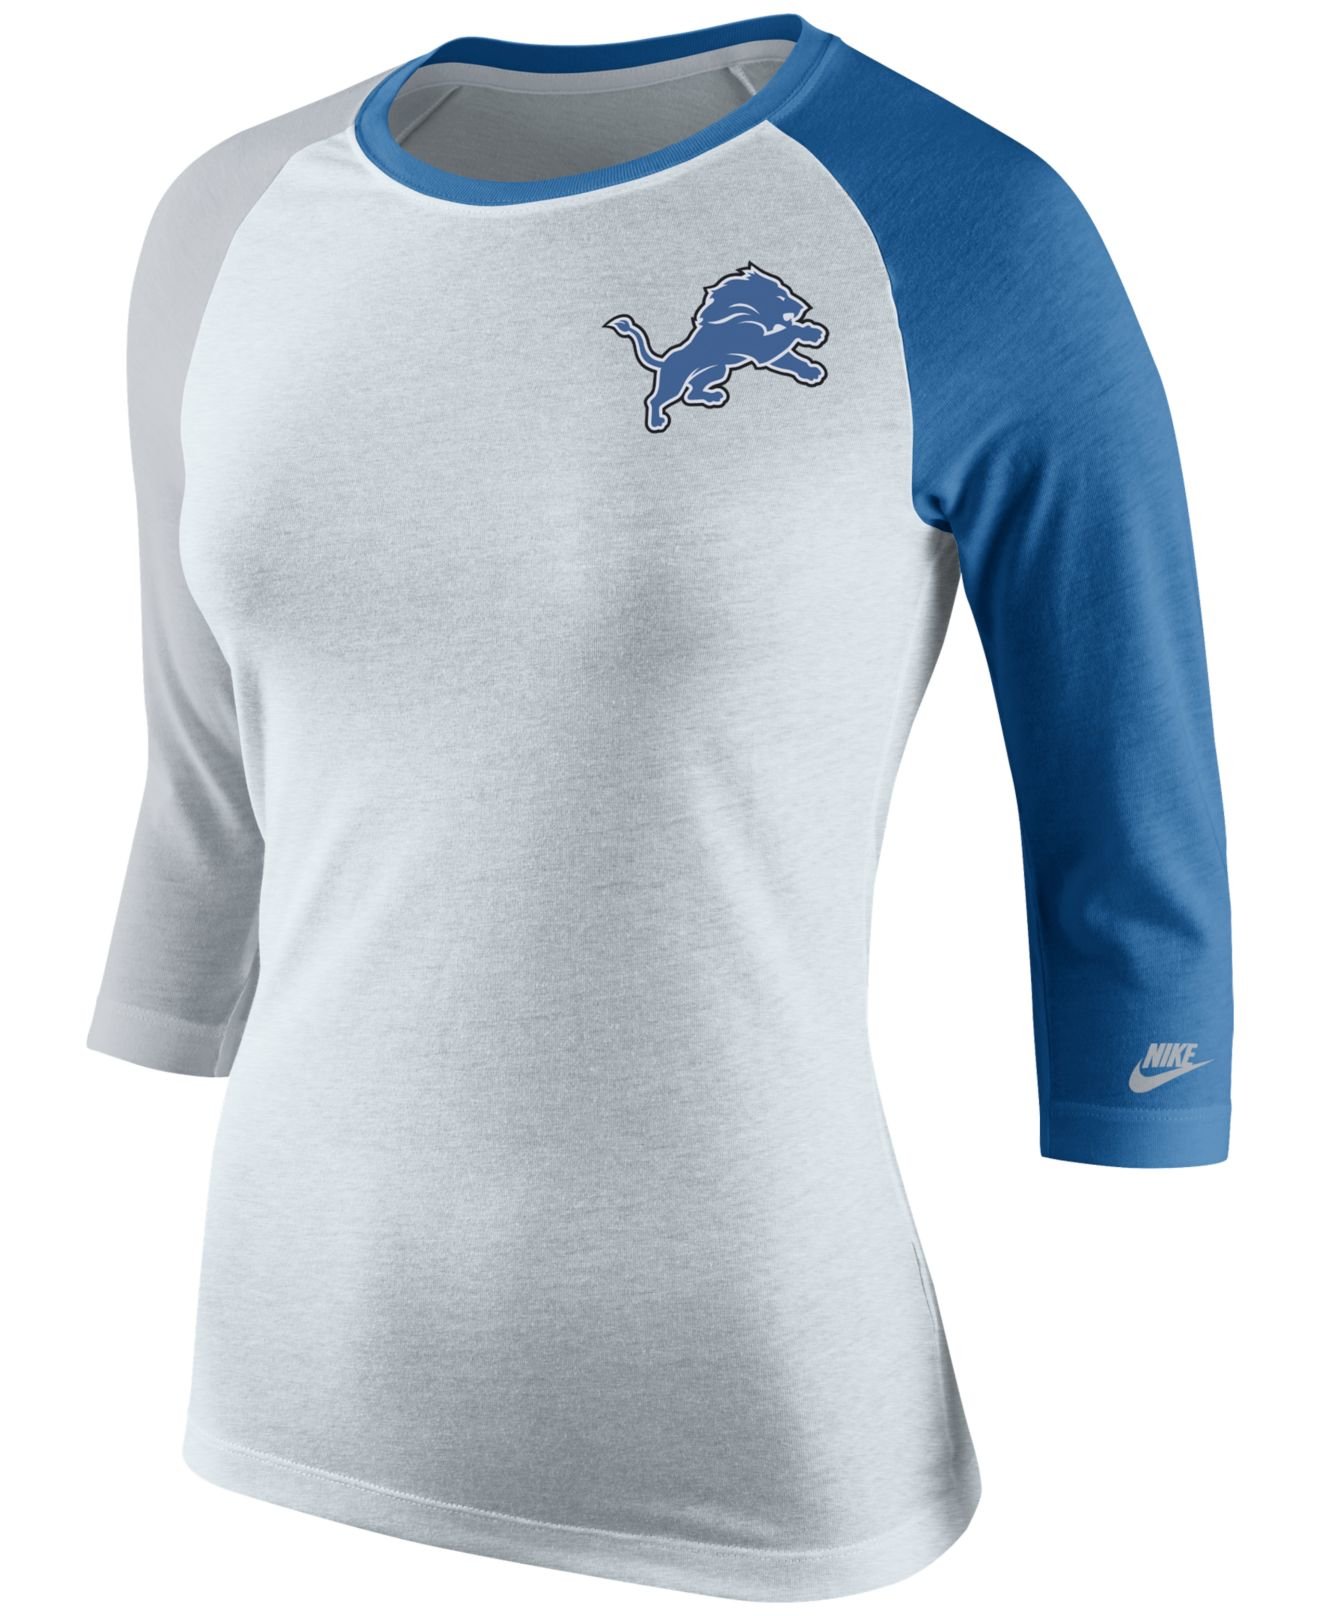 Lyst - Nike Women's Detroit Lions Strong Side T-shirt in Blue